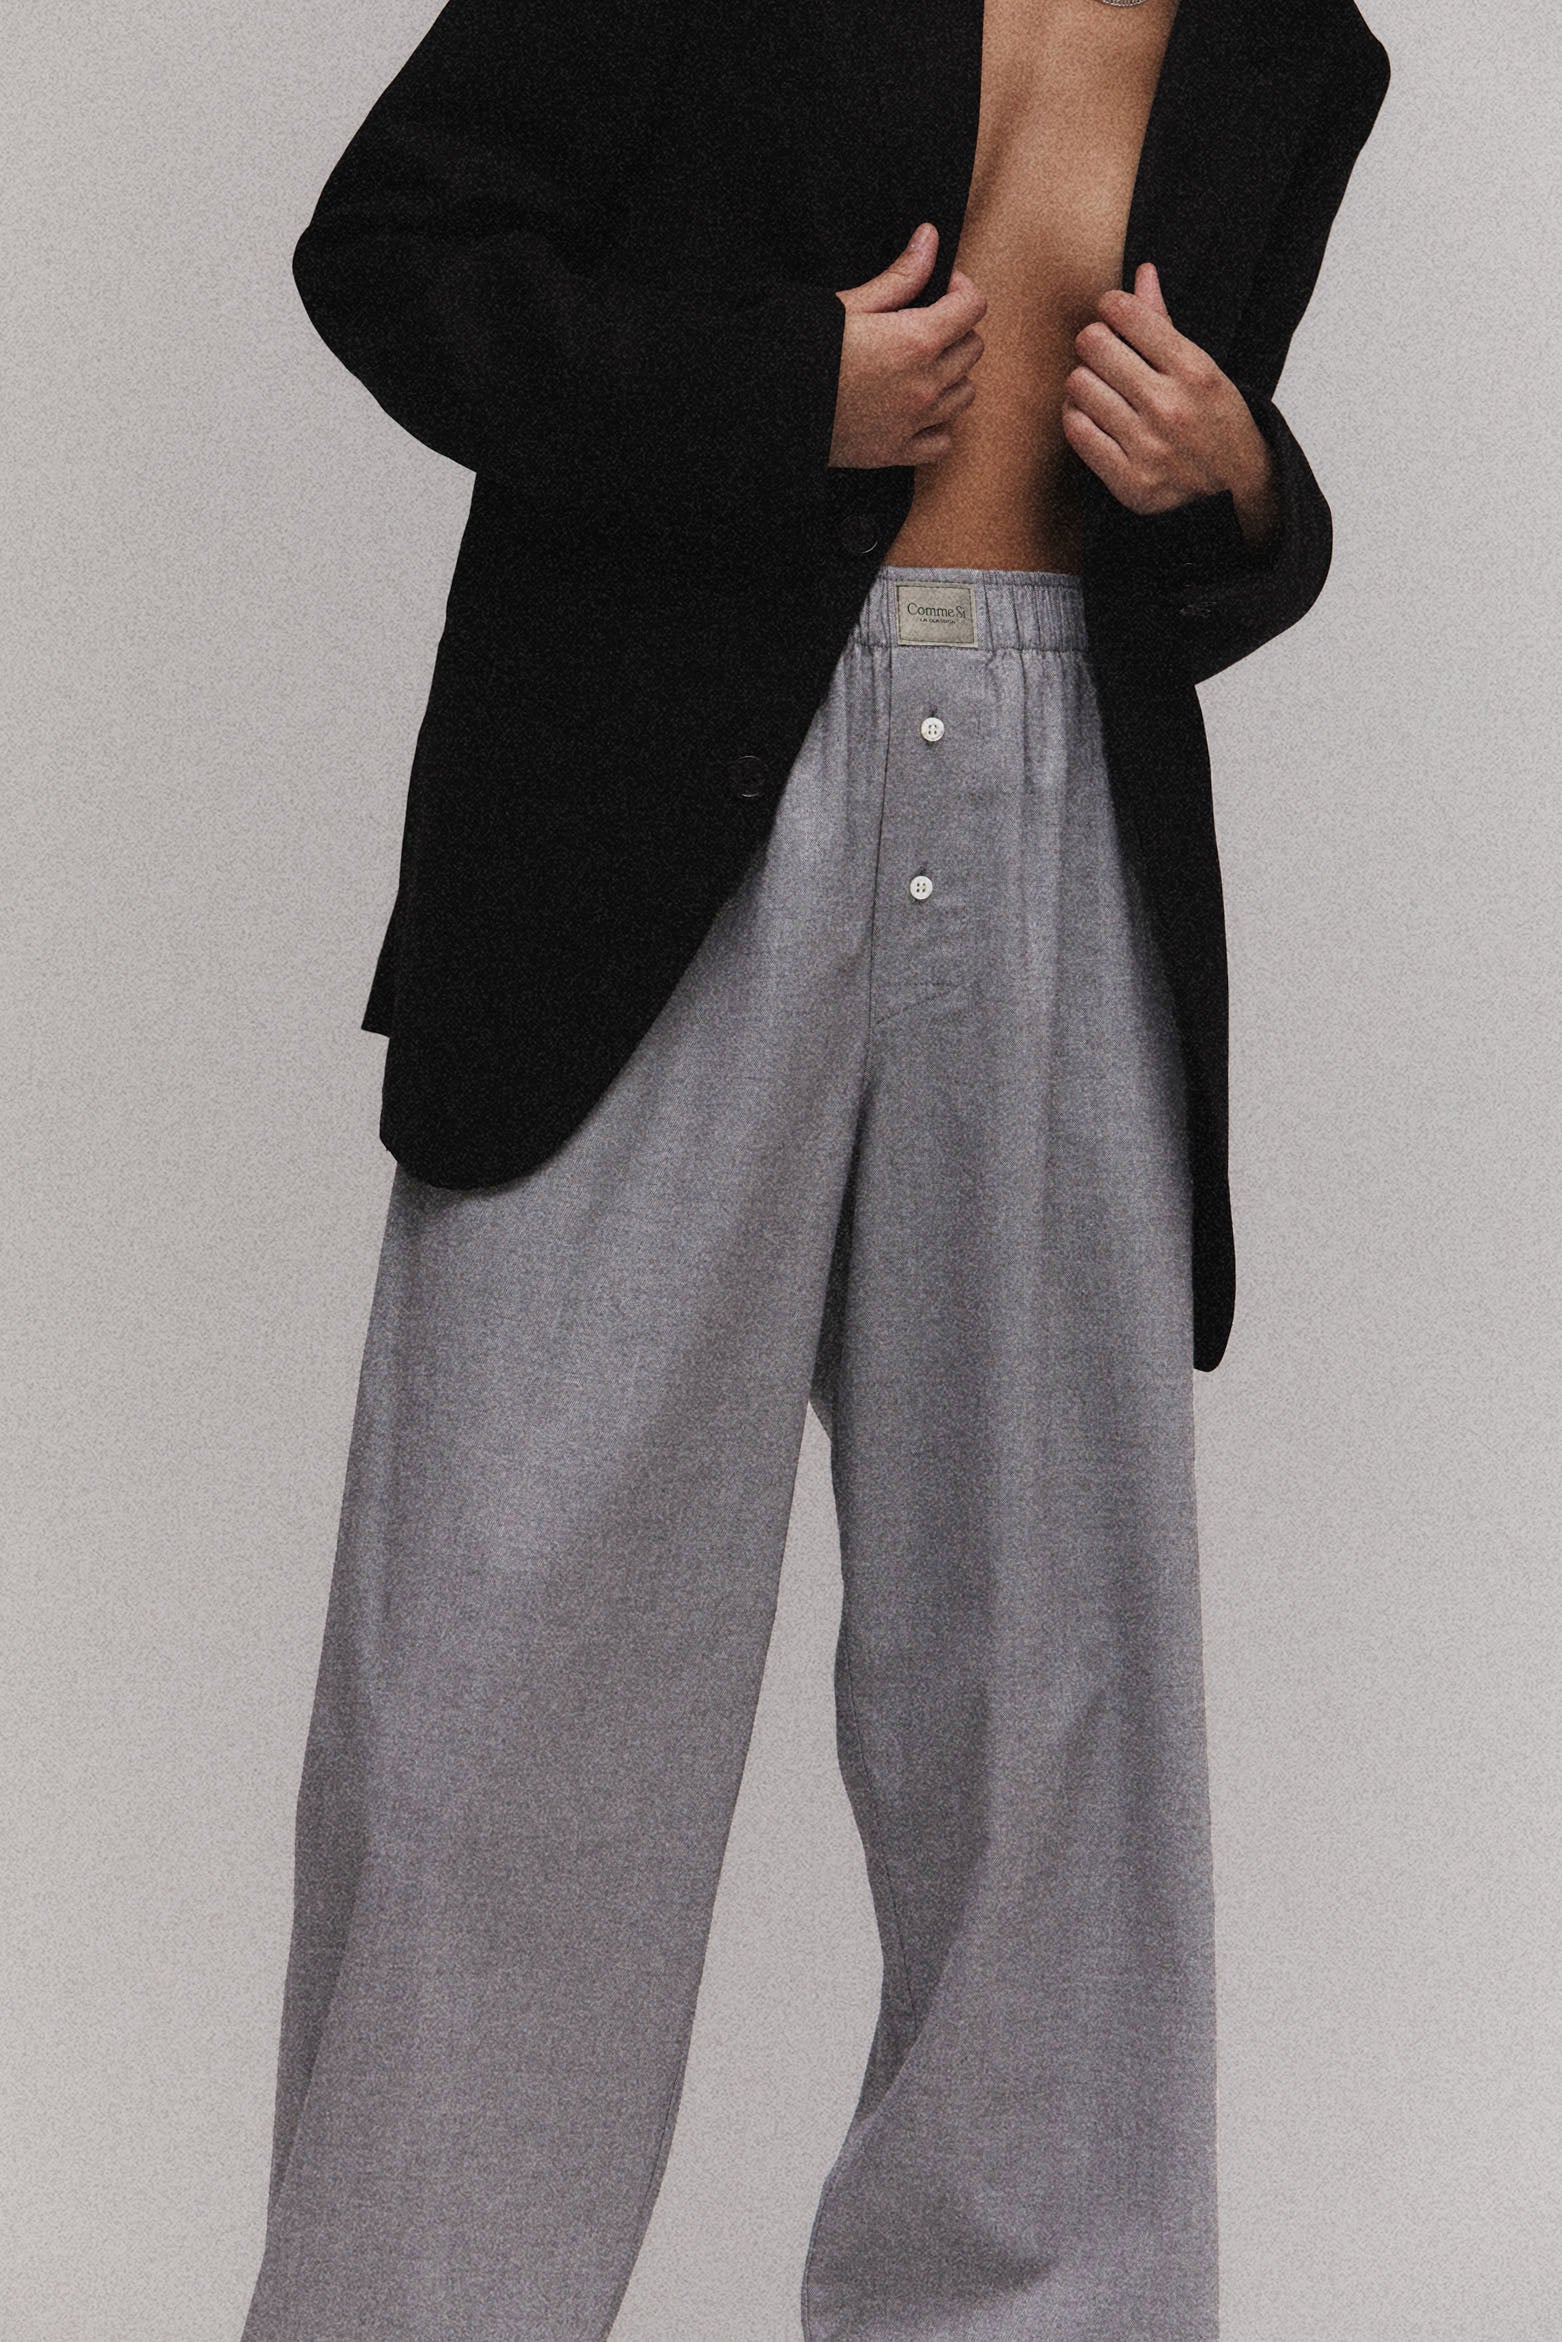 Model wears La Boxer Alta in Grey Herringbone, cotton flannel, with a black blazer